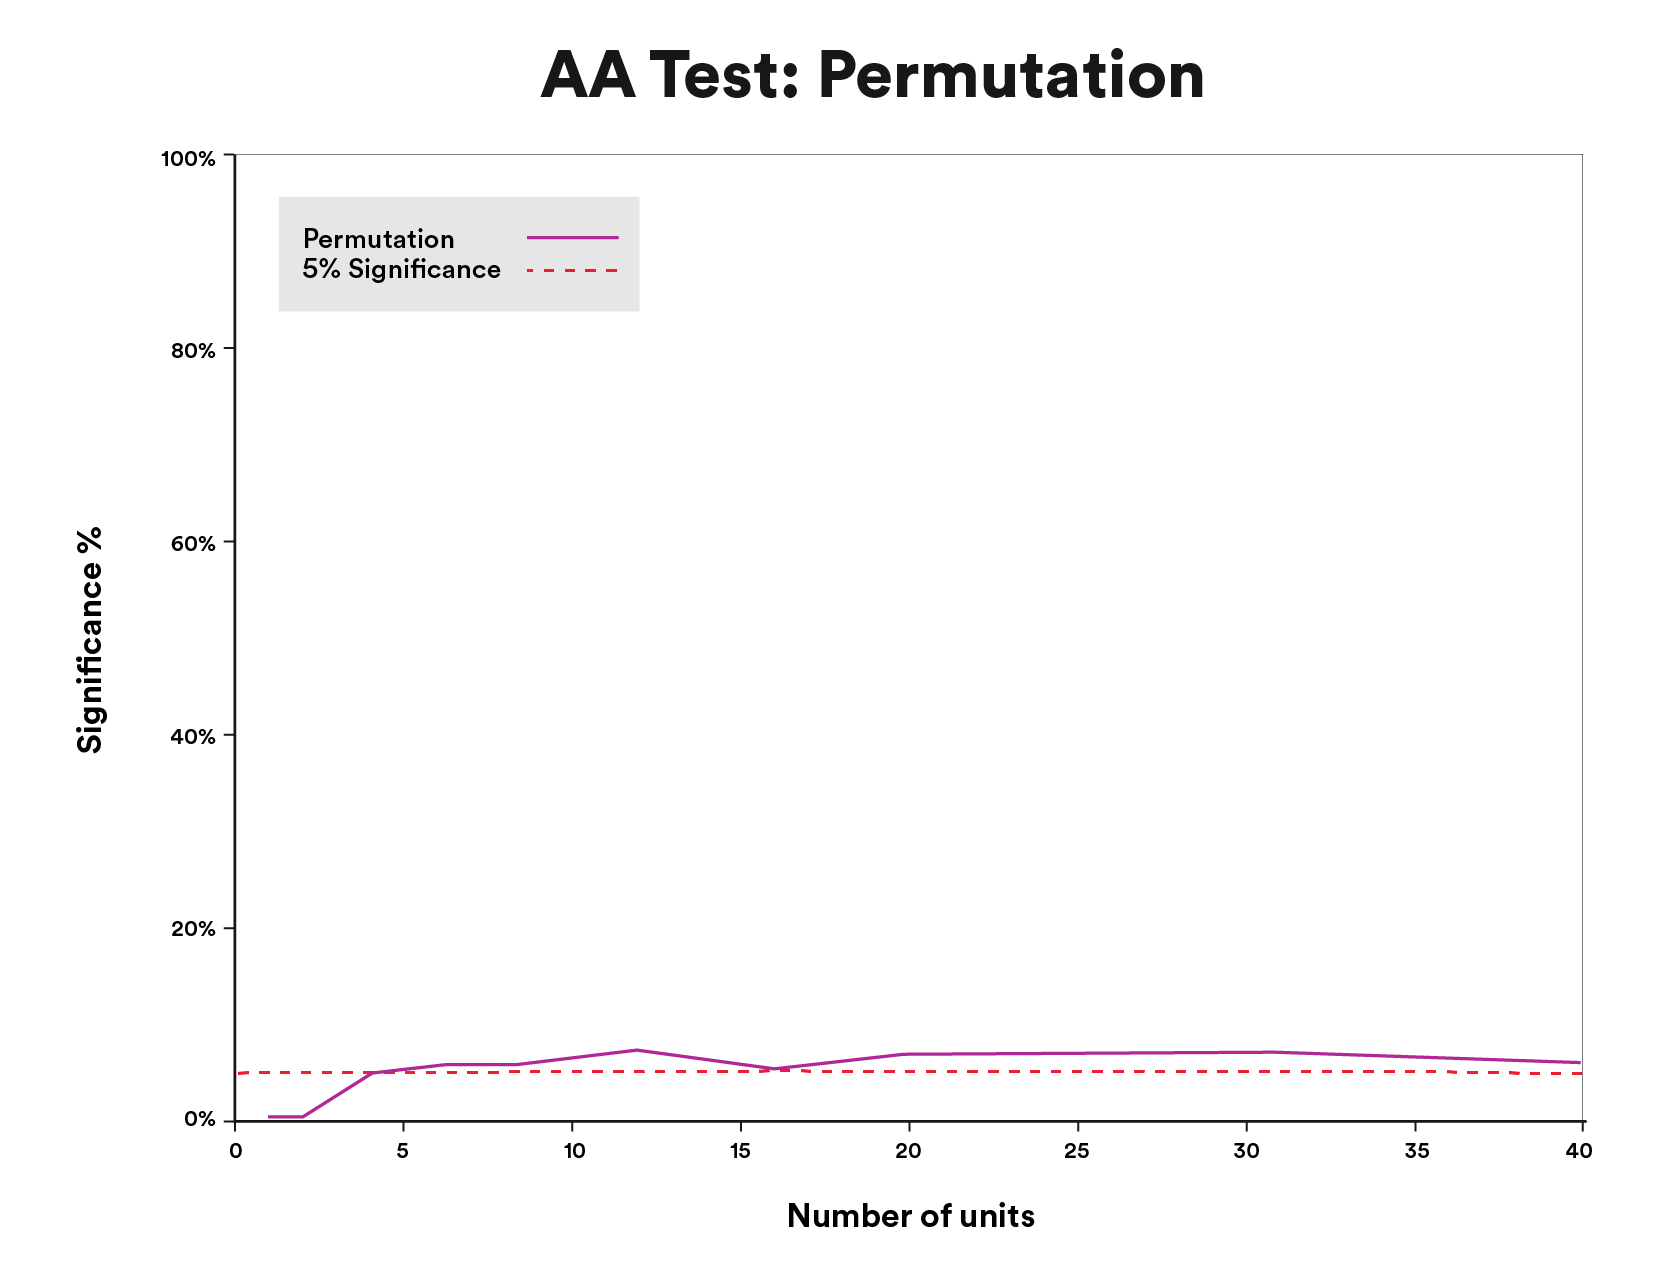 Figure: 8 AA Test: Permutation graph